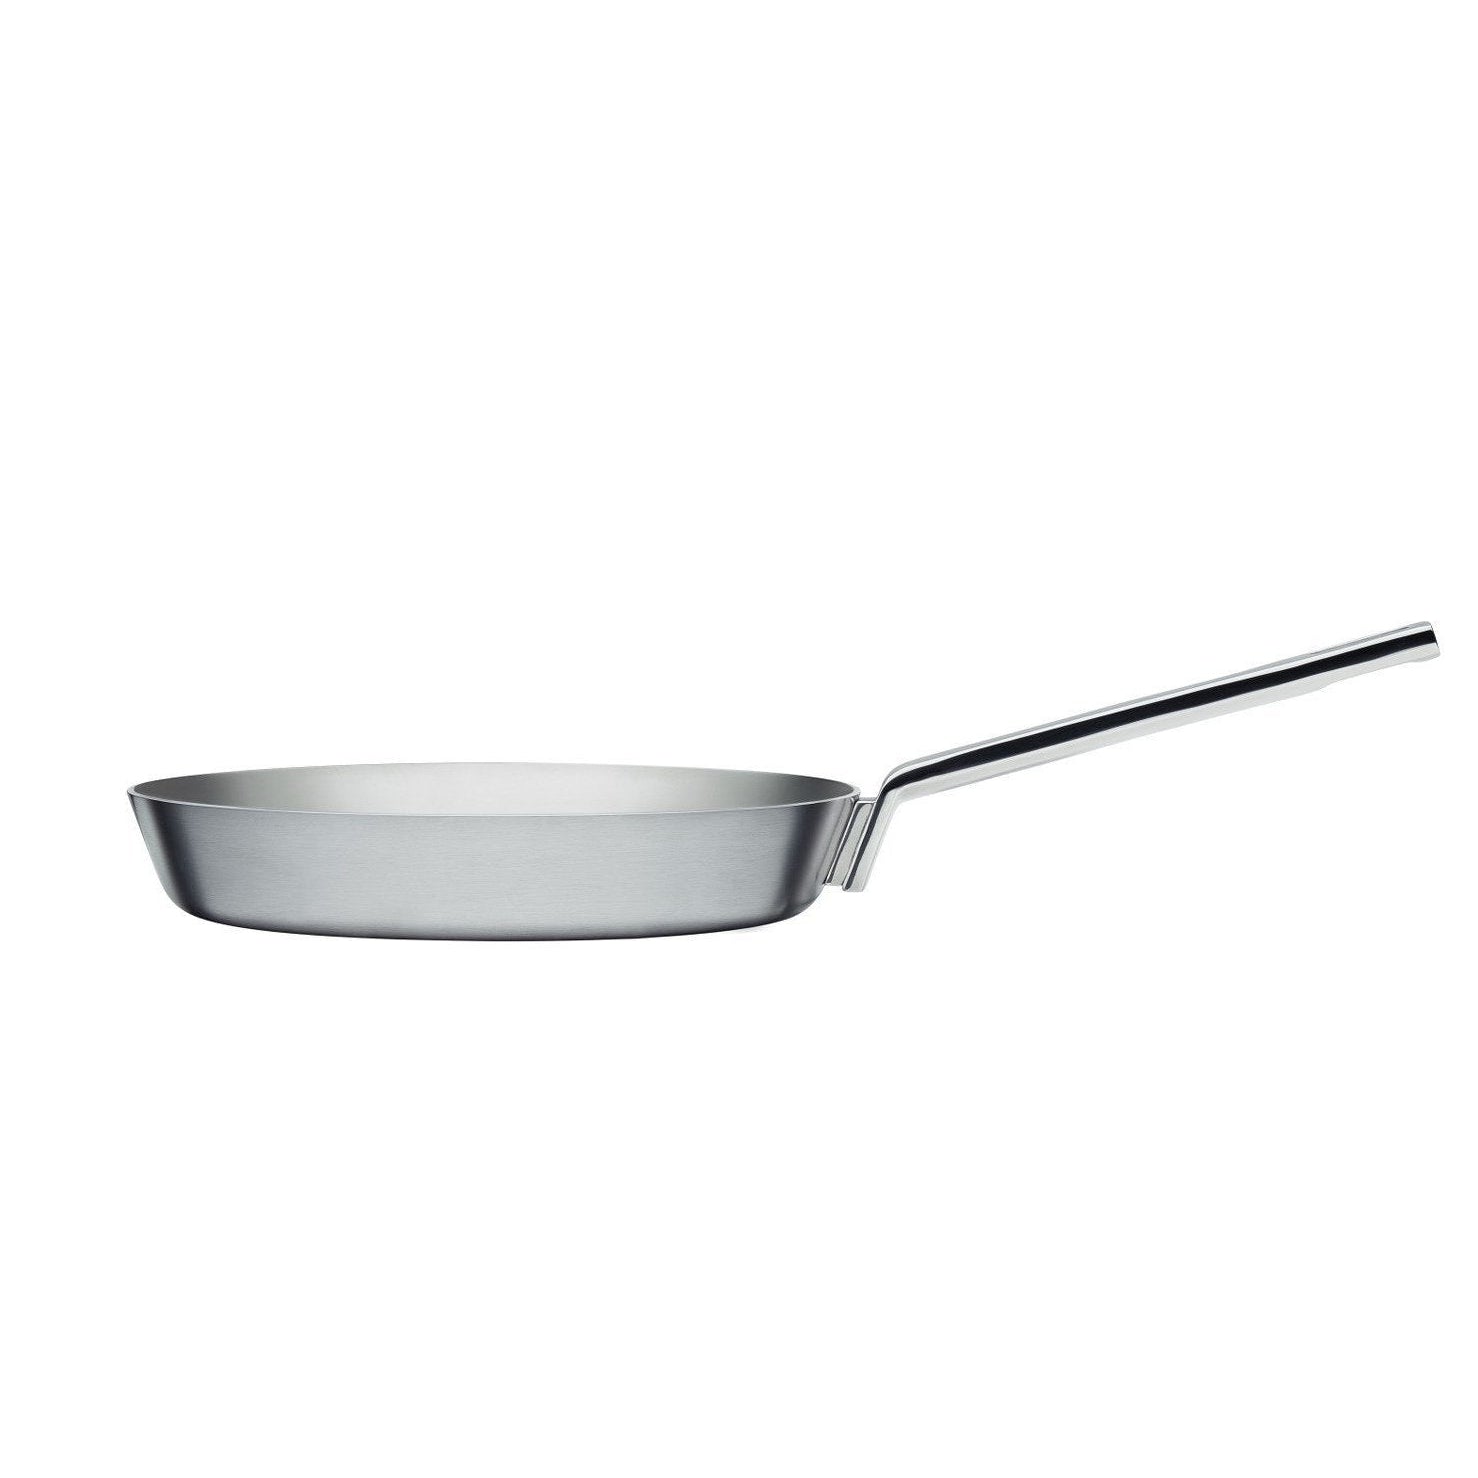 ITTALA Herramientas Frying Pan, 28 cm